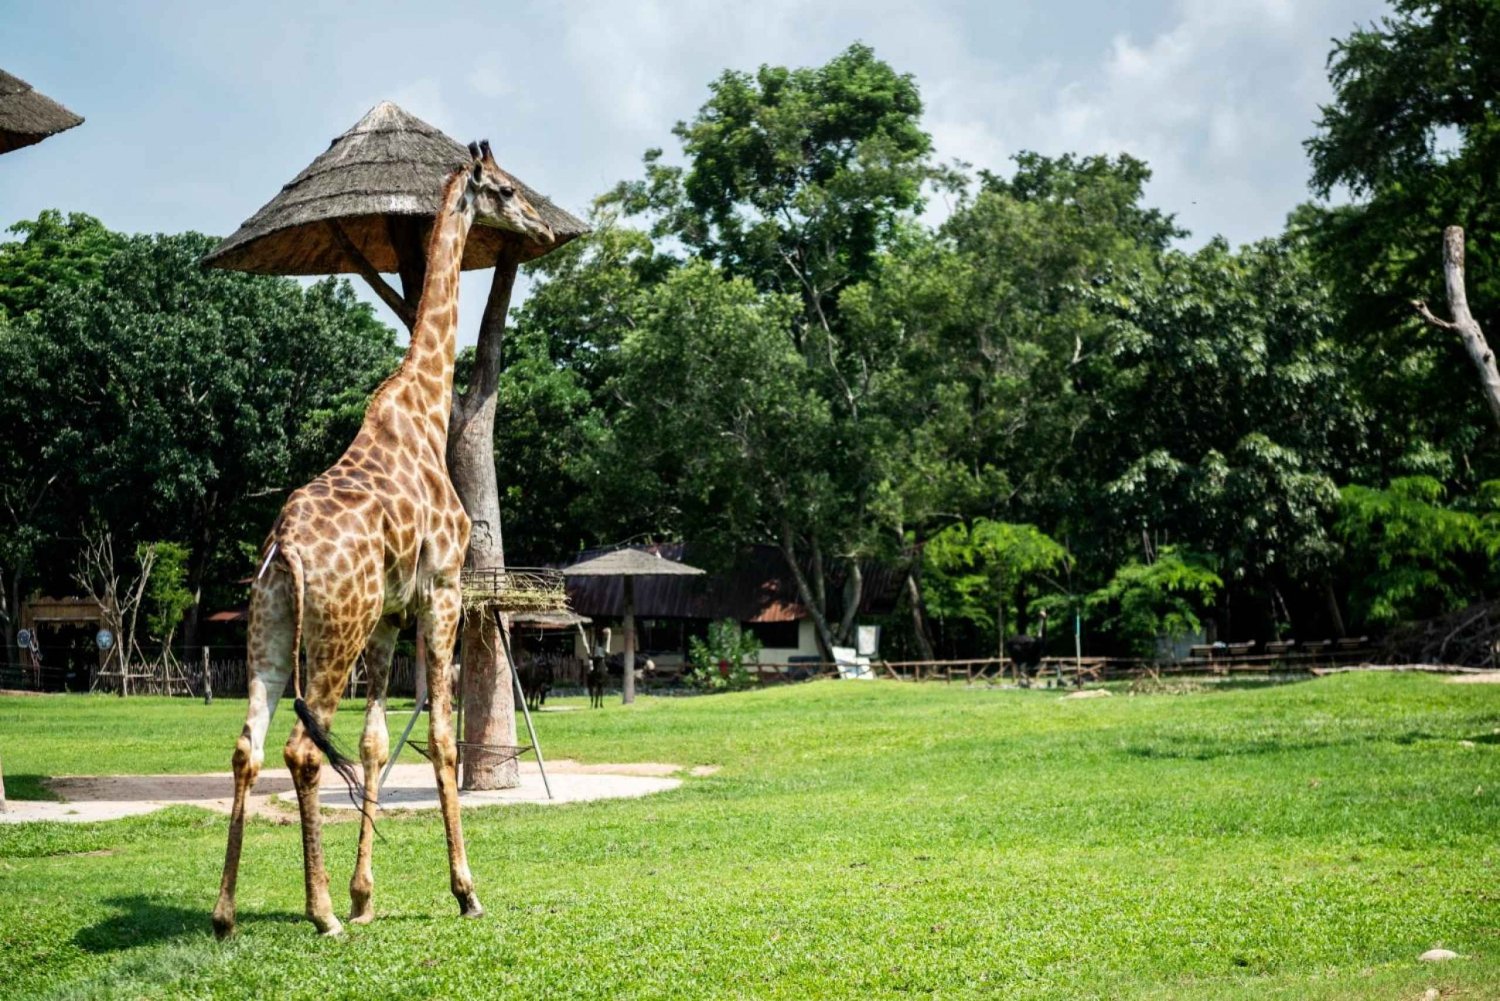 The Giraffe Encounter Safari